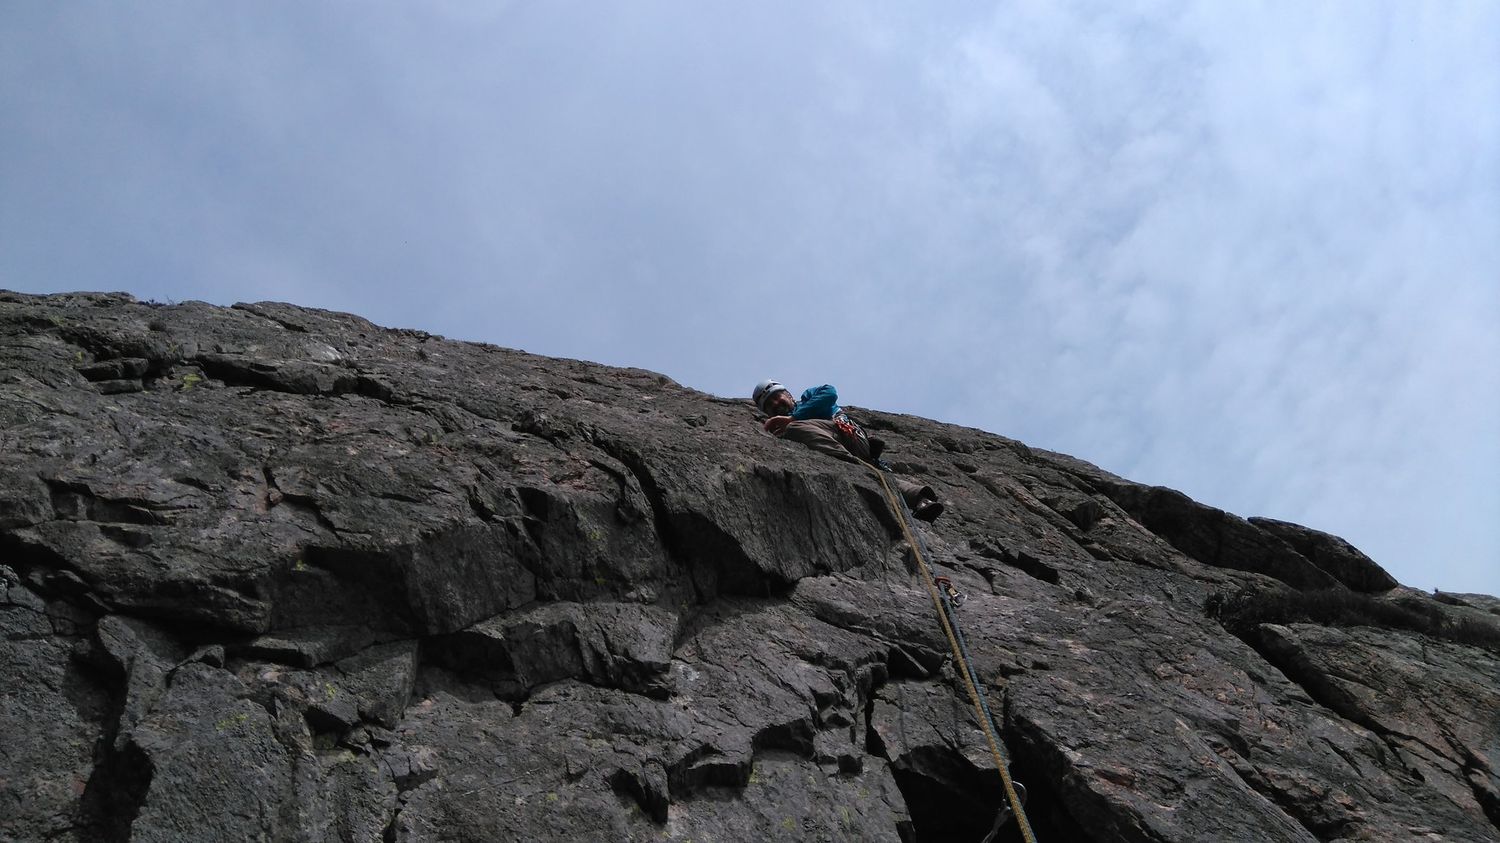  Rock climbing on Gimmer Crag, Langdale - Chris Ensoll Mountain Guide 